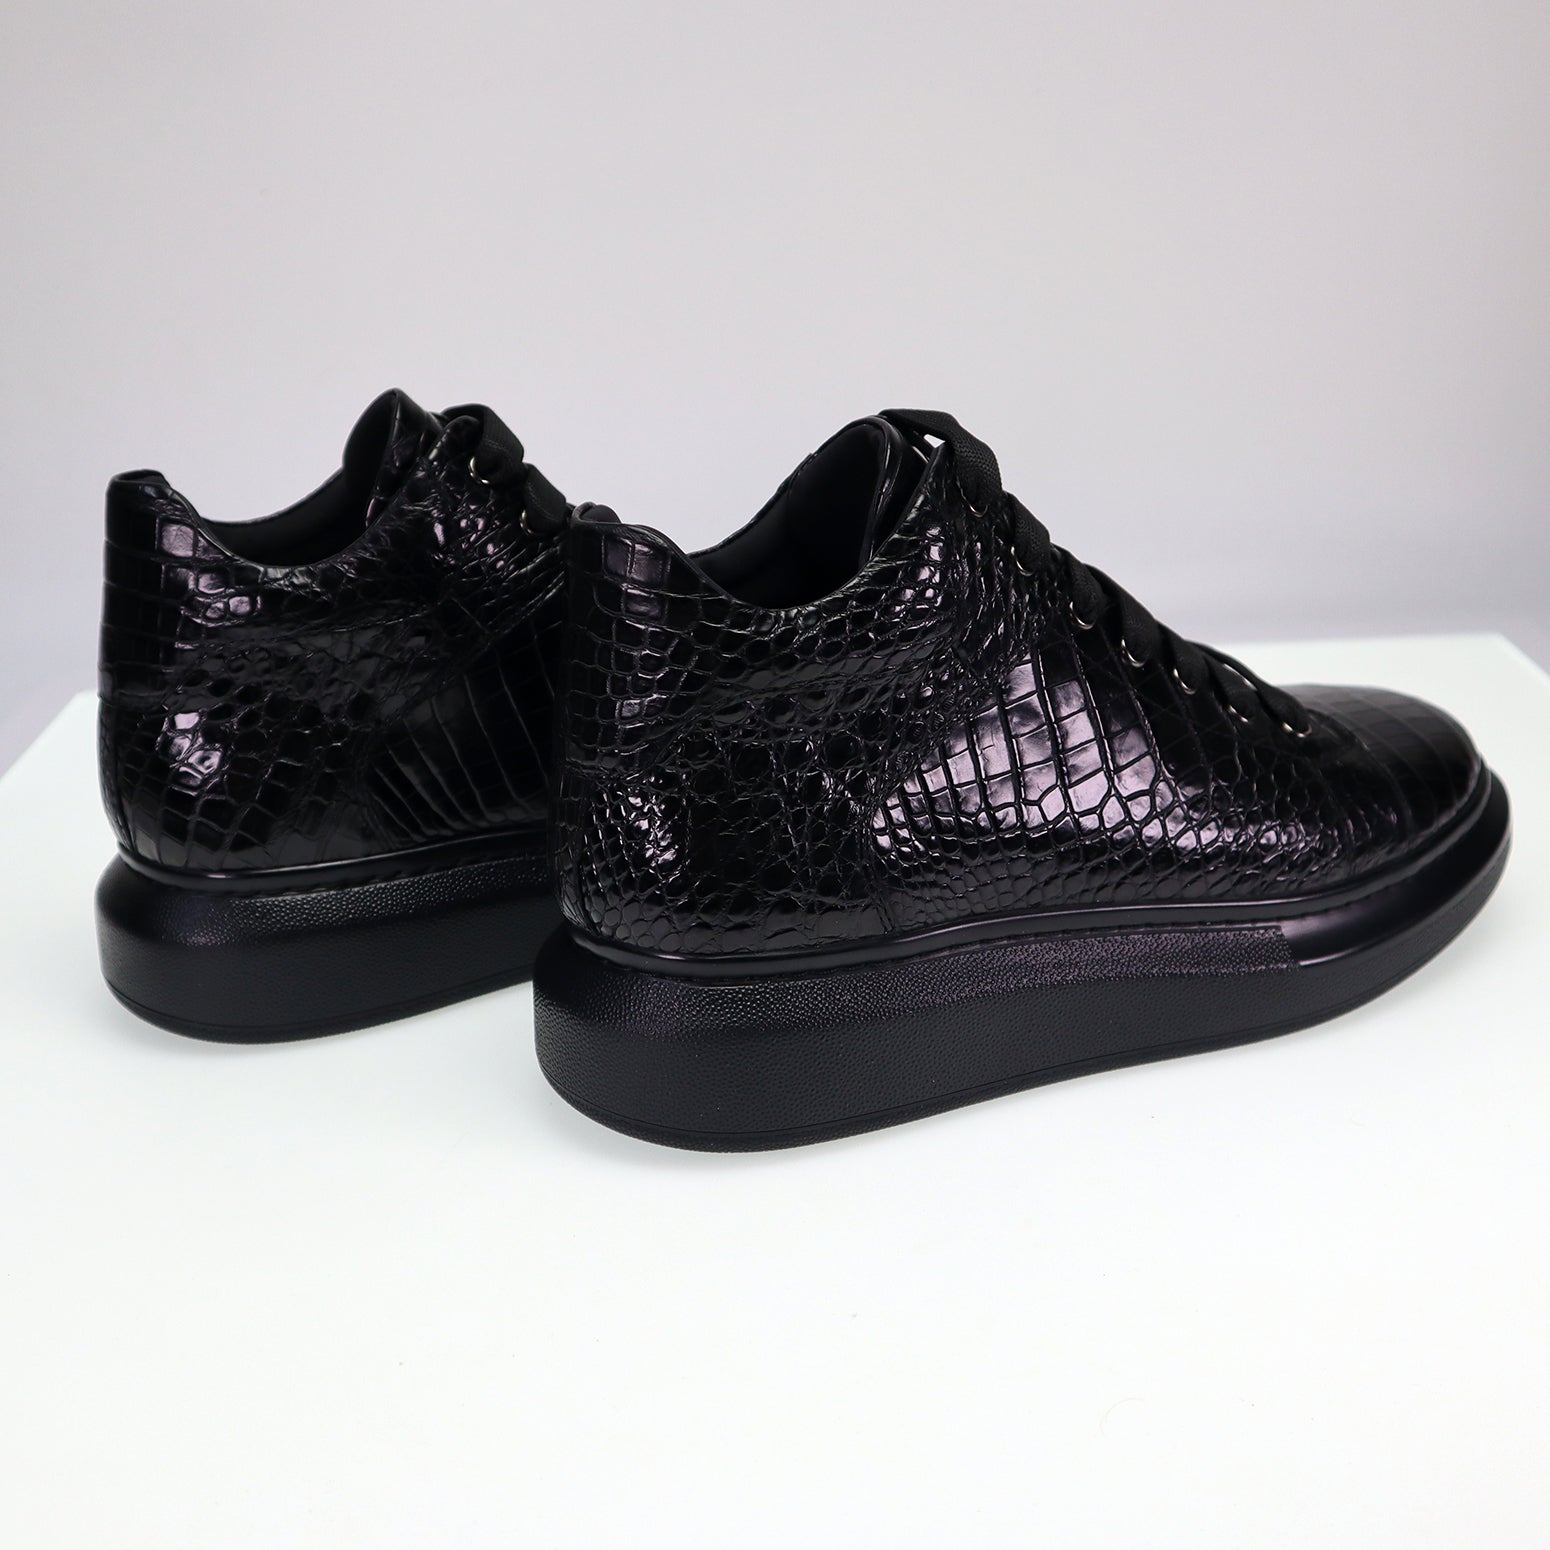 Men's Shoes Genuine Crocodile Alligator Skin Leather Handmade Black Size 7 - Size 11Us #8683 10 / Black